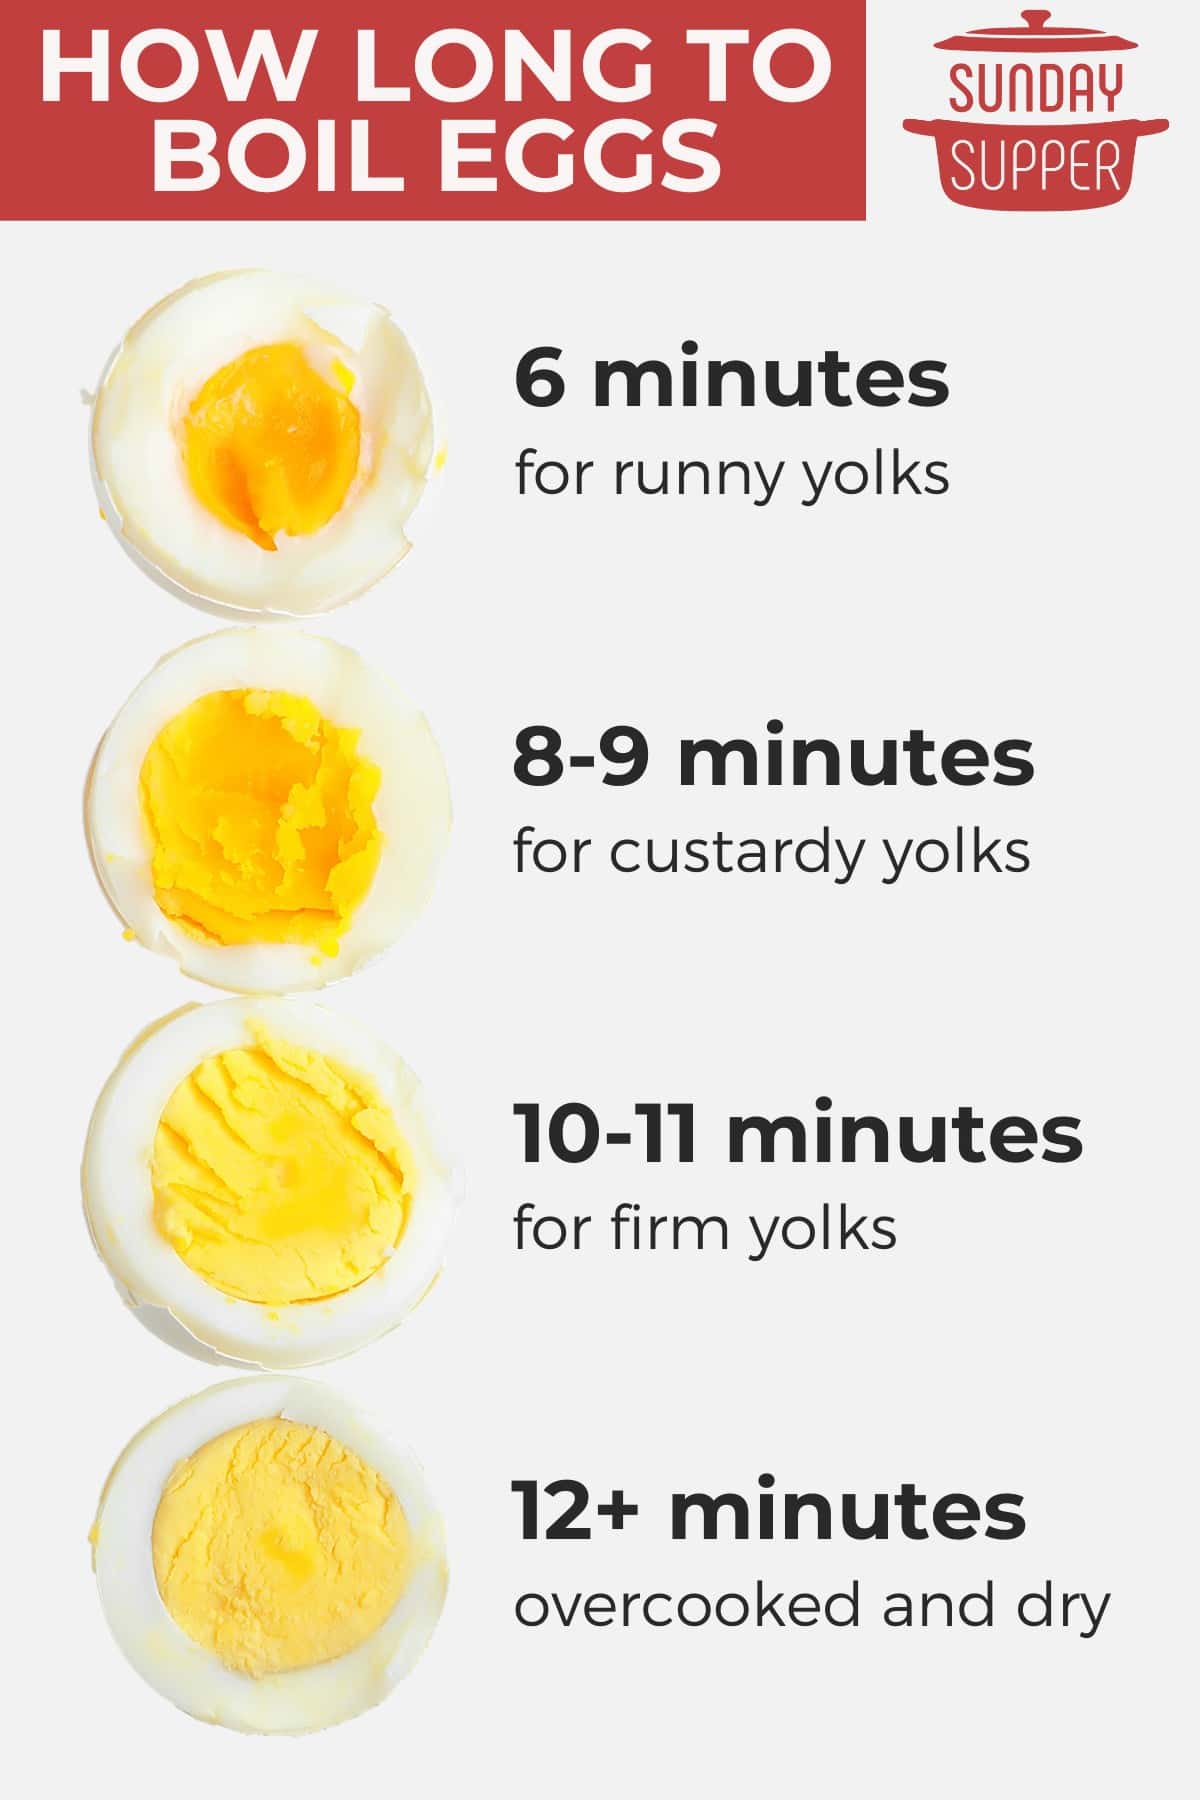 How long to boil an egg